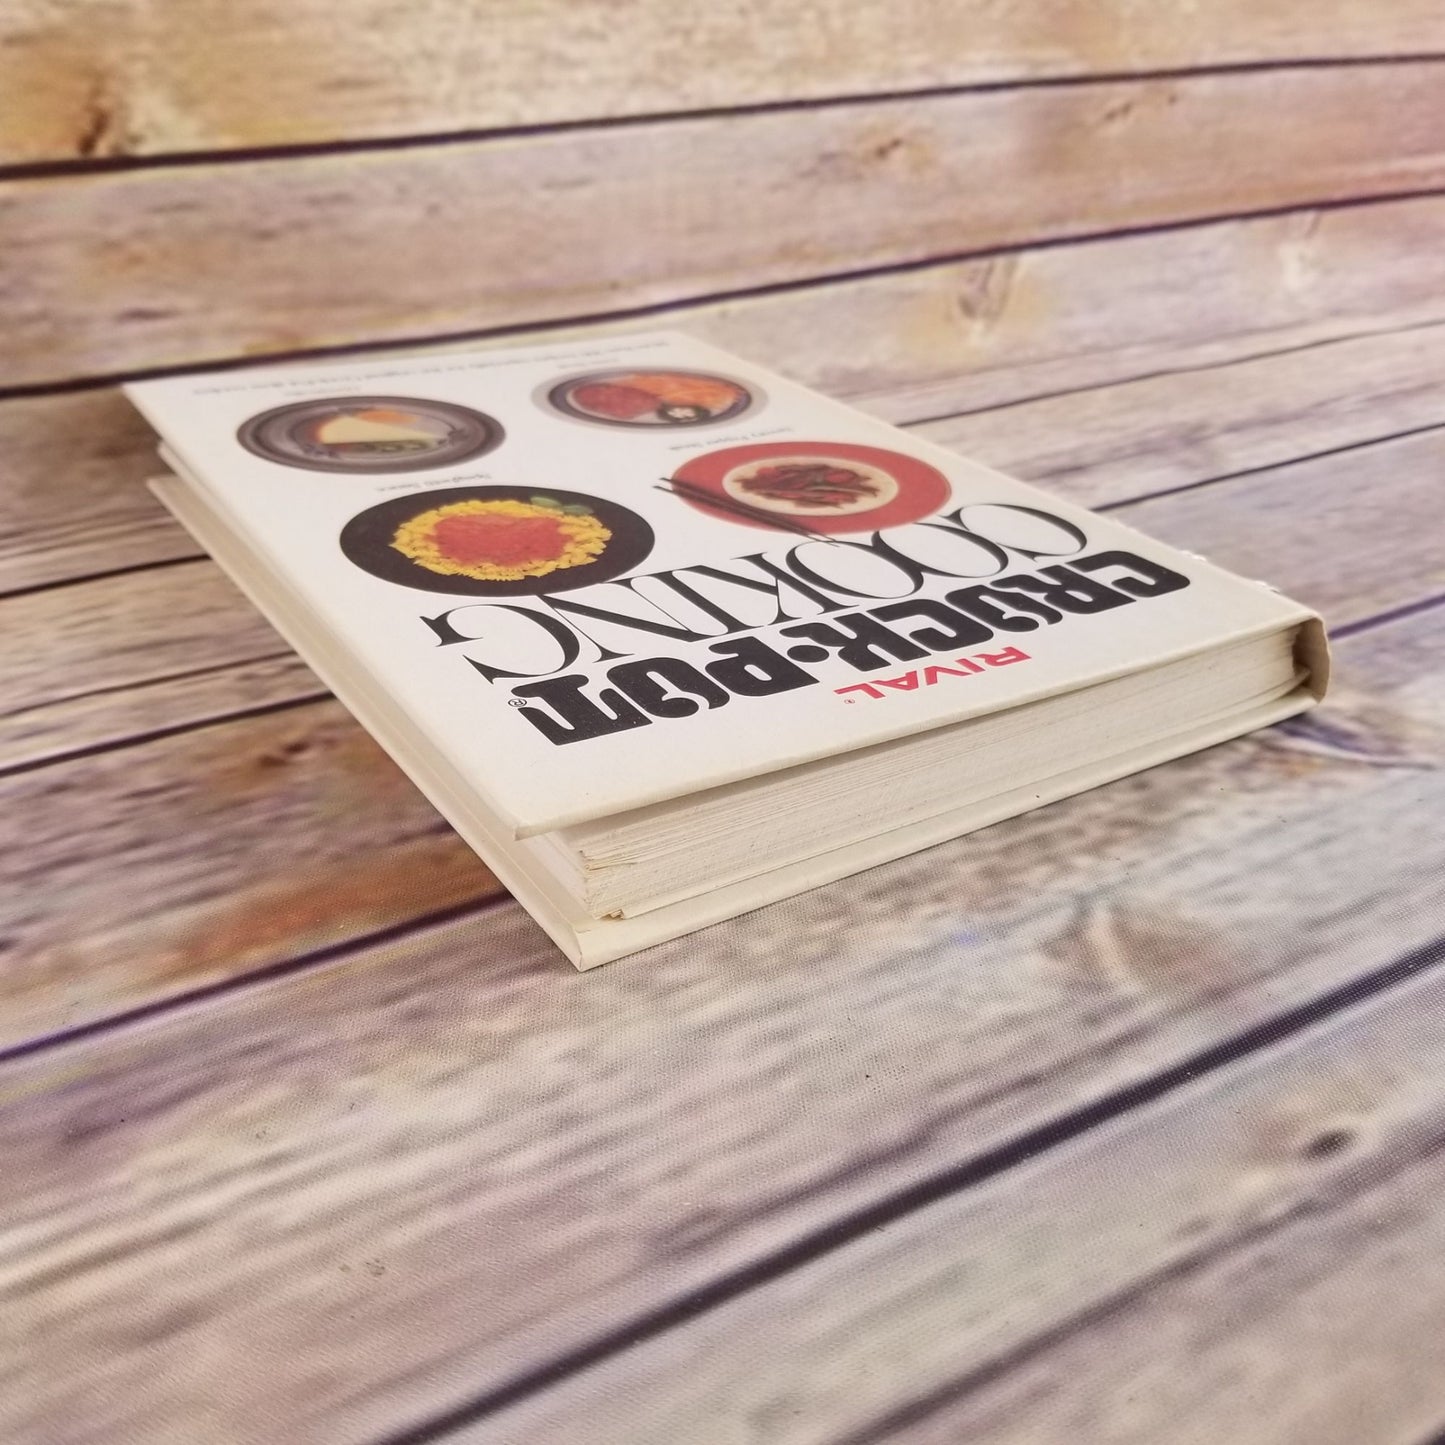 Rival Crock Pot Cookbook Slow Cooker Recipes 1975 Spiral Bound Hardcover